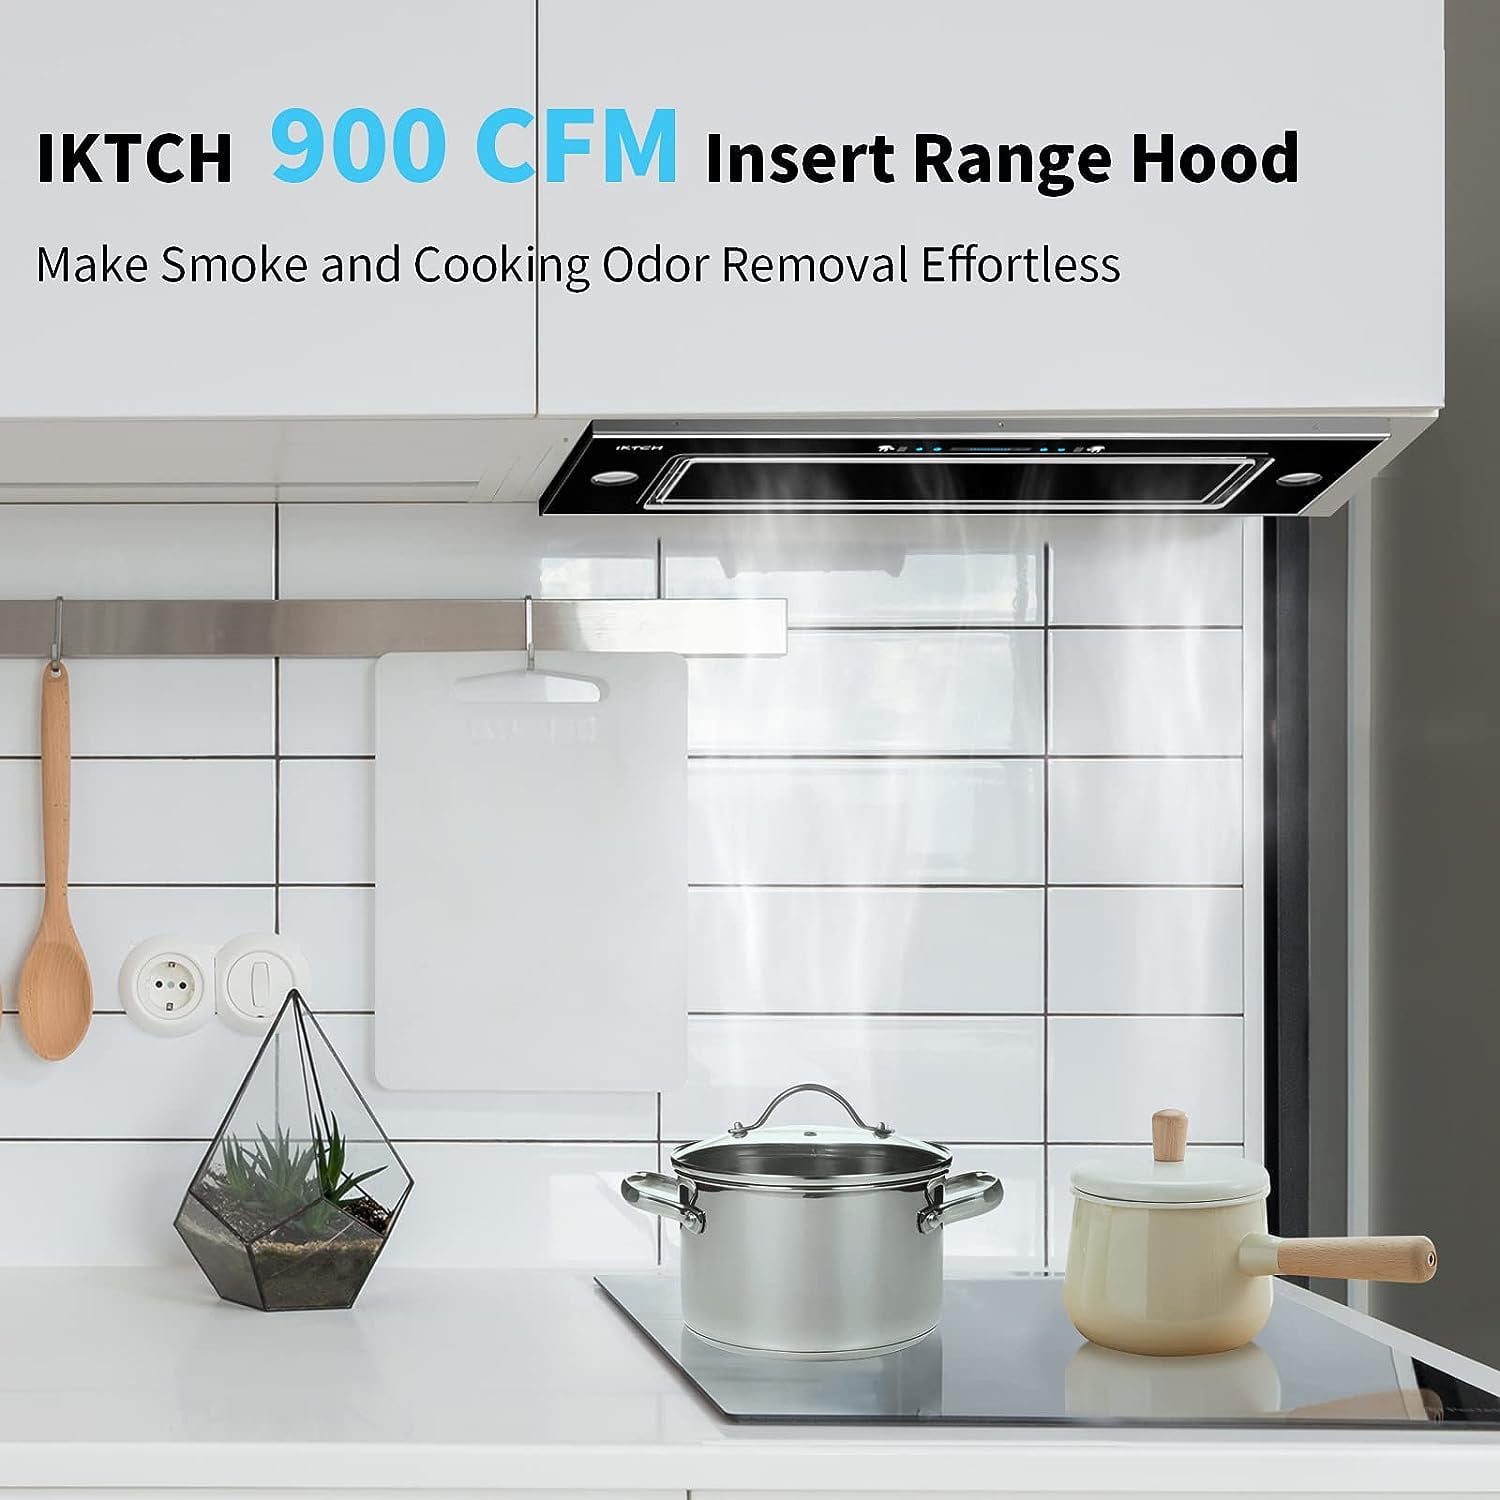 IKTCH IKB01-36B New 30in Range Hood Insert 900 CFM Ducted White Stainless Steel